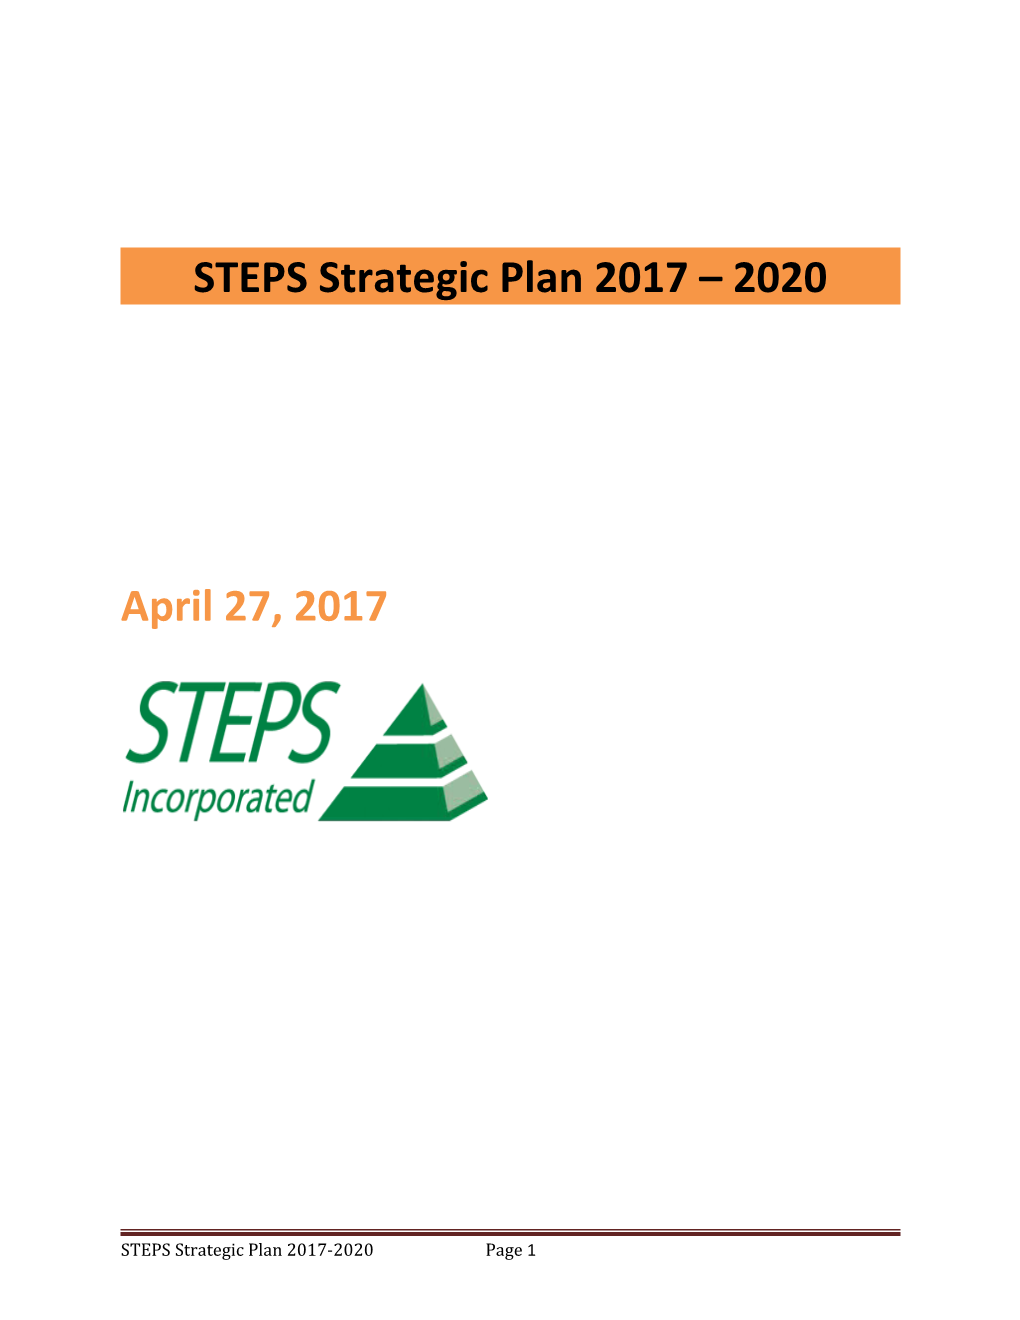 STEPS Strategic Plan 2017 2020